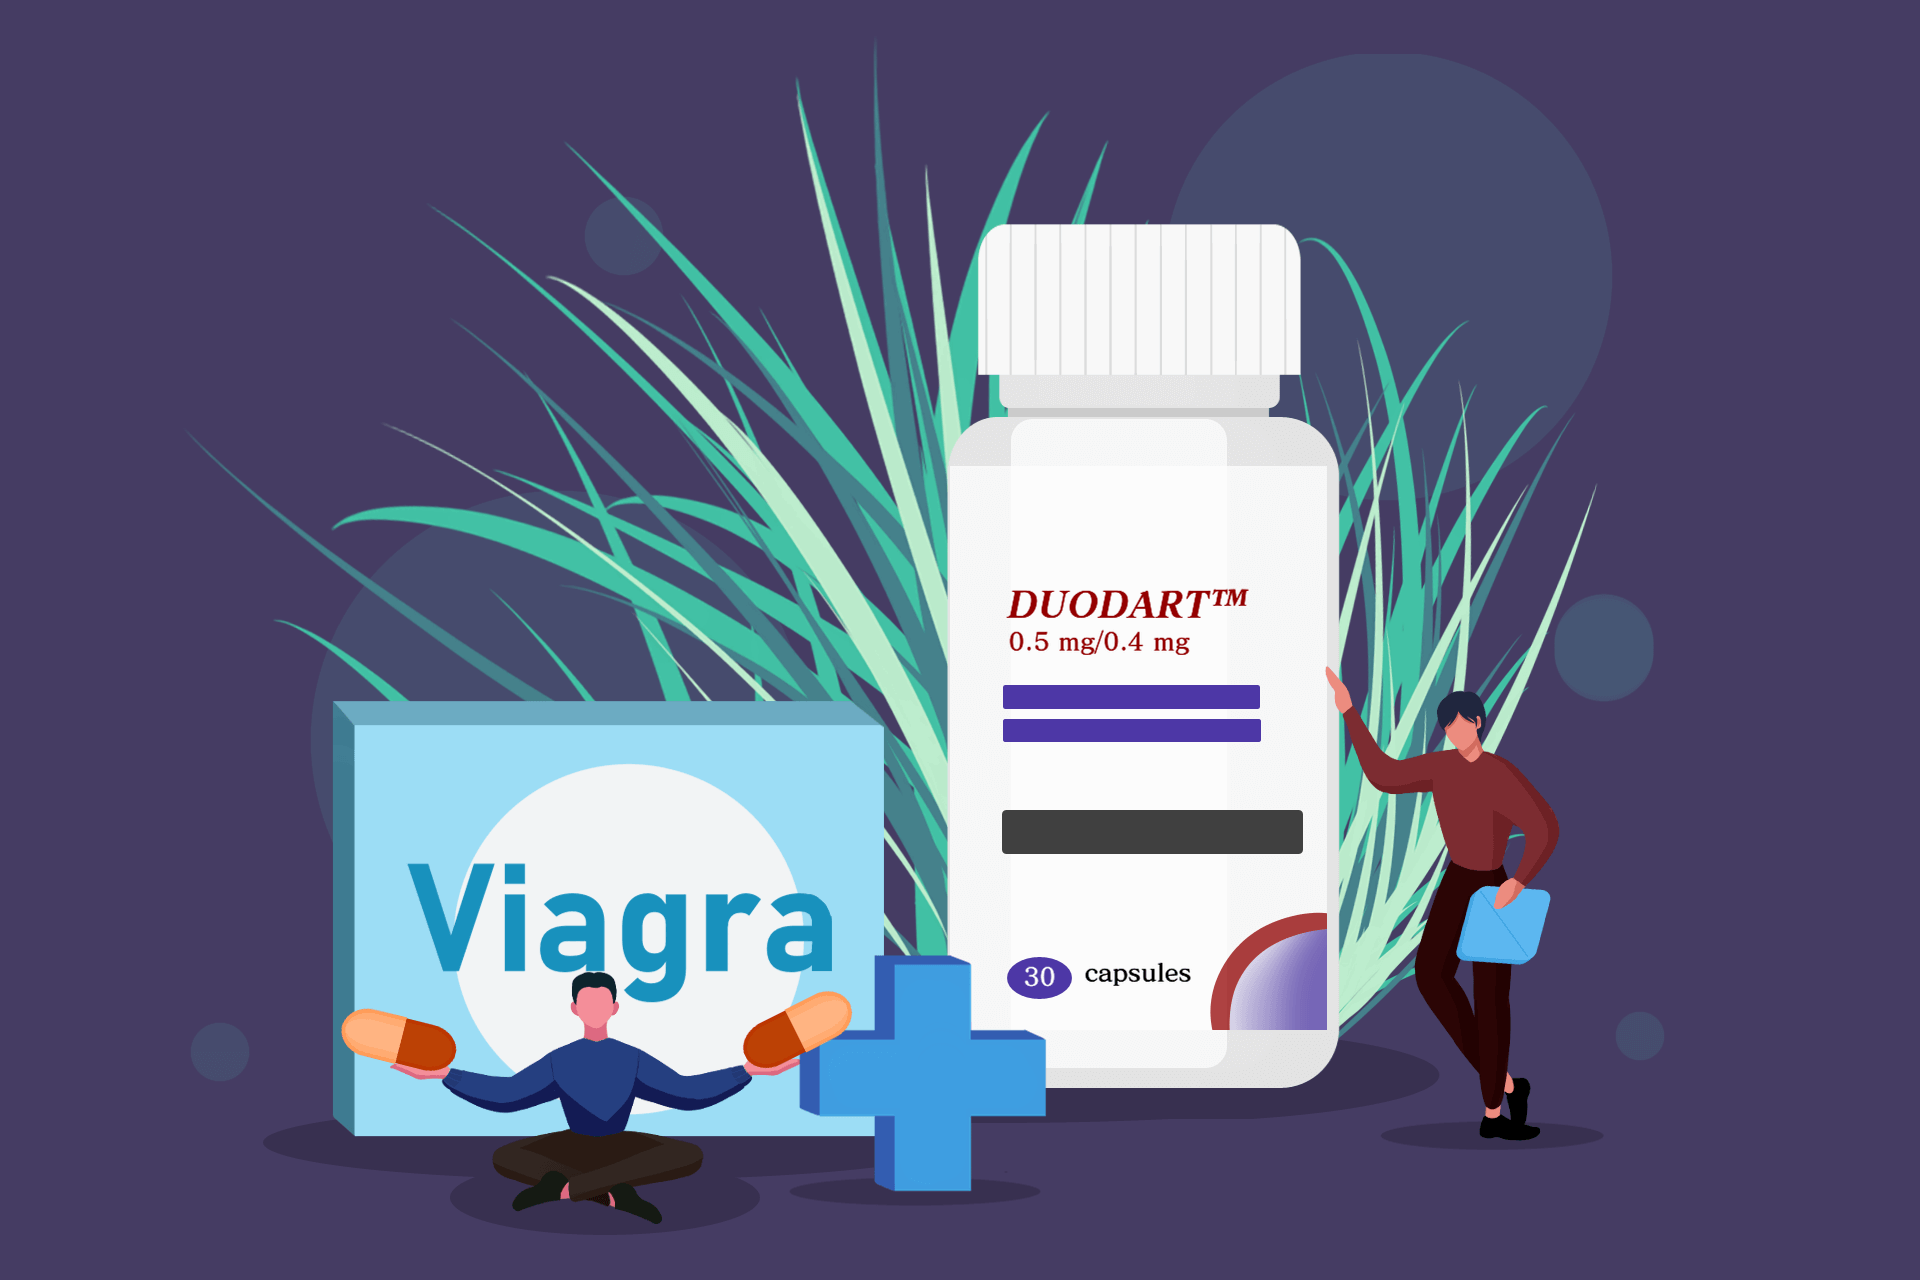 Viagra and Duodart